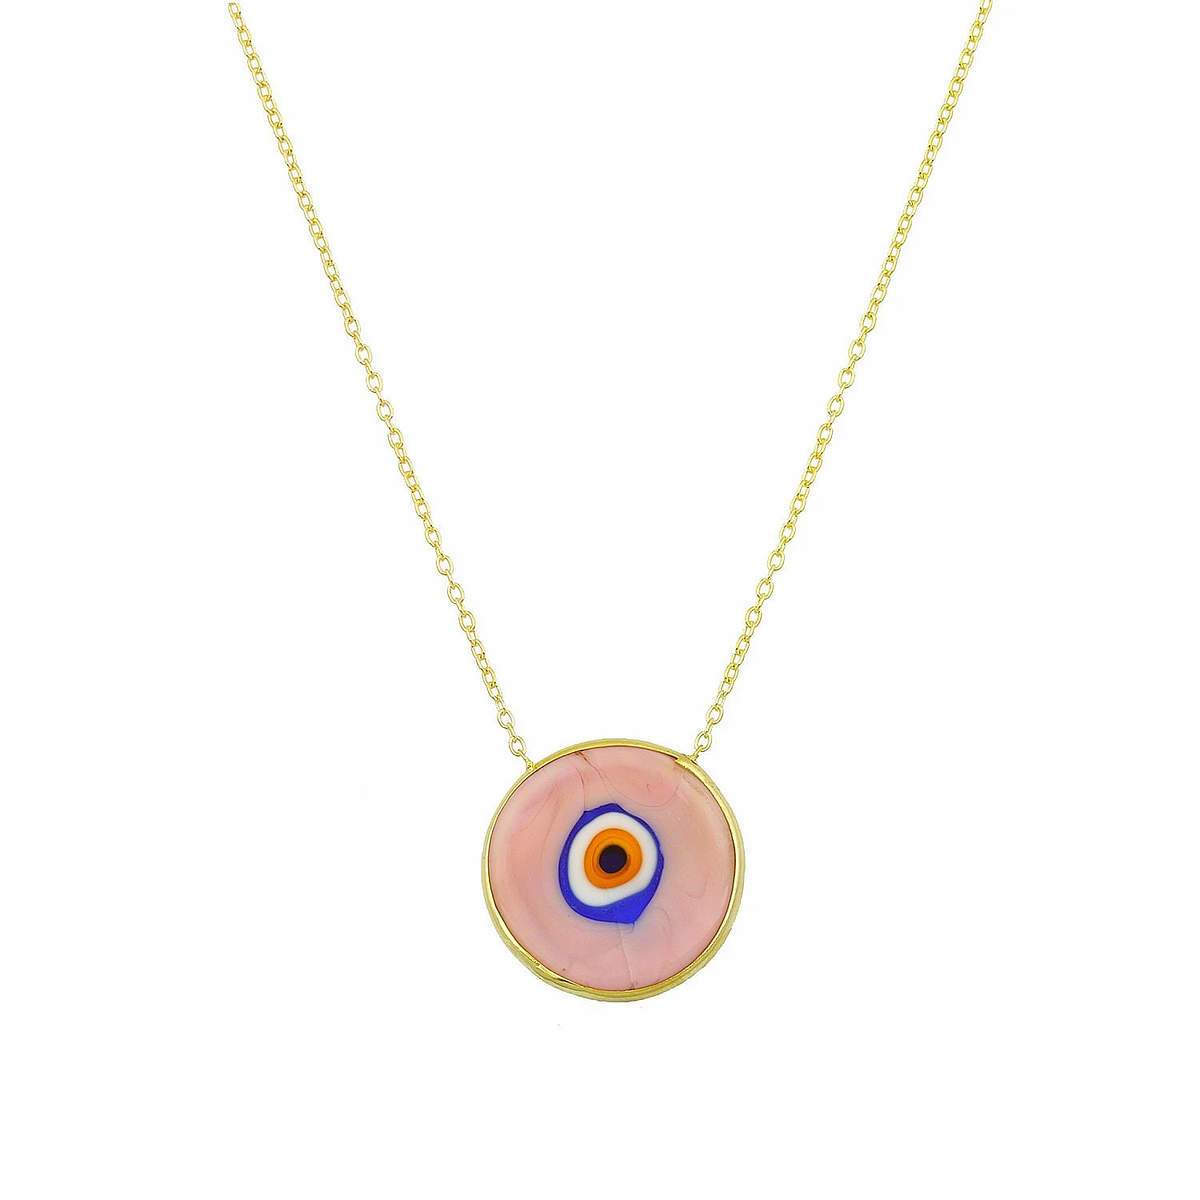 Antique Evil Eye Necklace in Pink